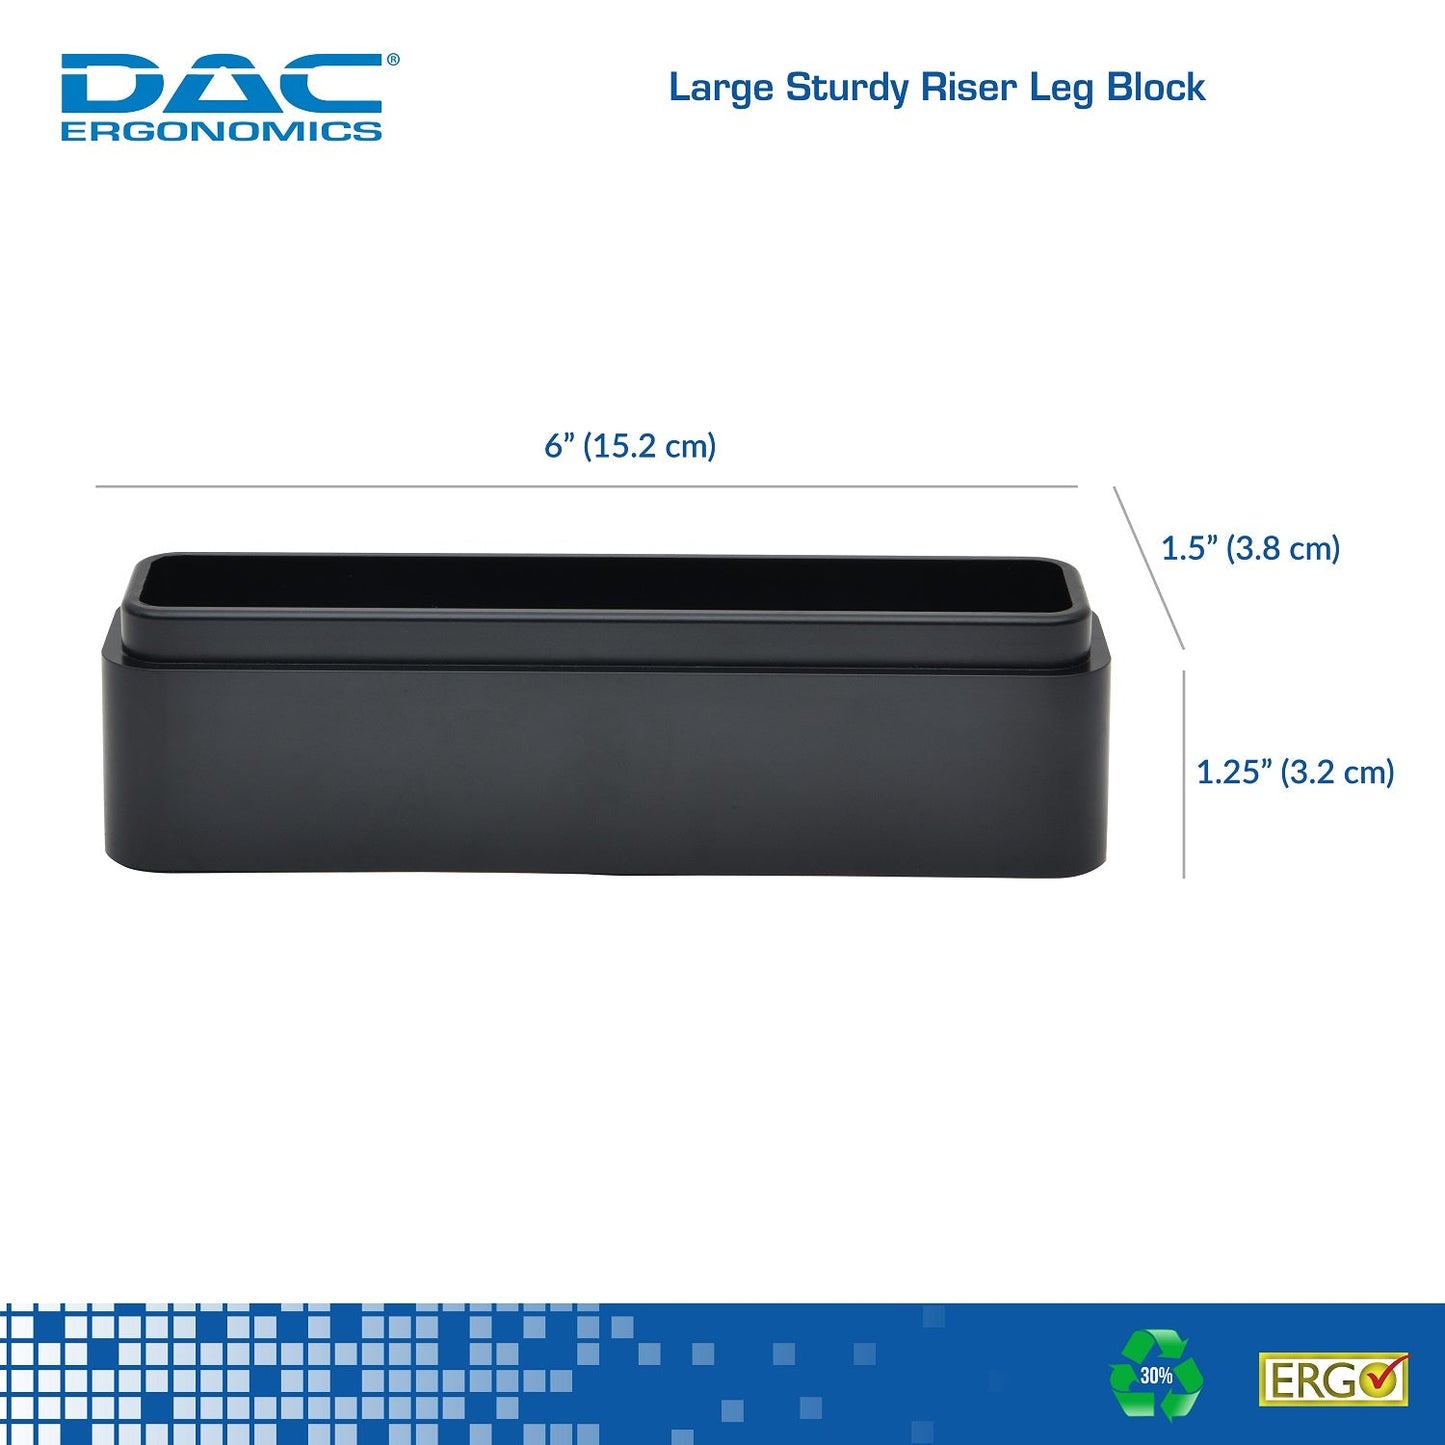 DAC® Stax MP-216 Ergonomic Height-Adjustable Monitor/Laptop Riser Blocks Kit, Black